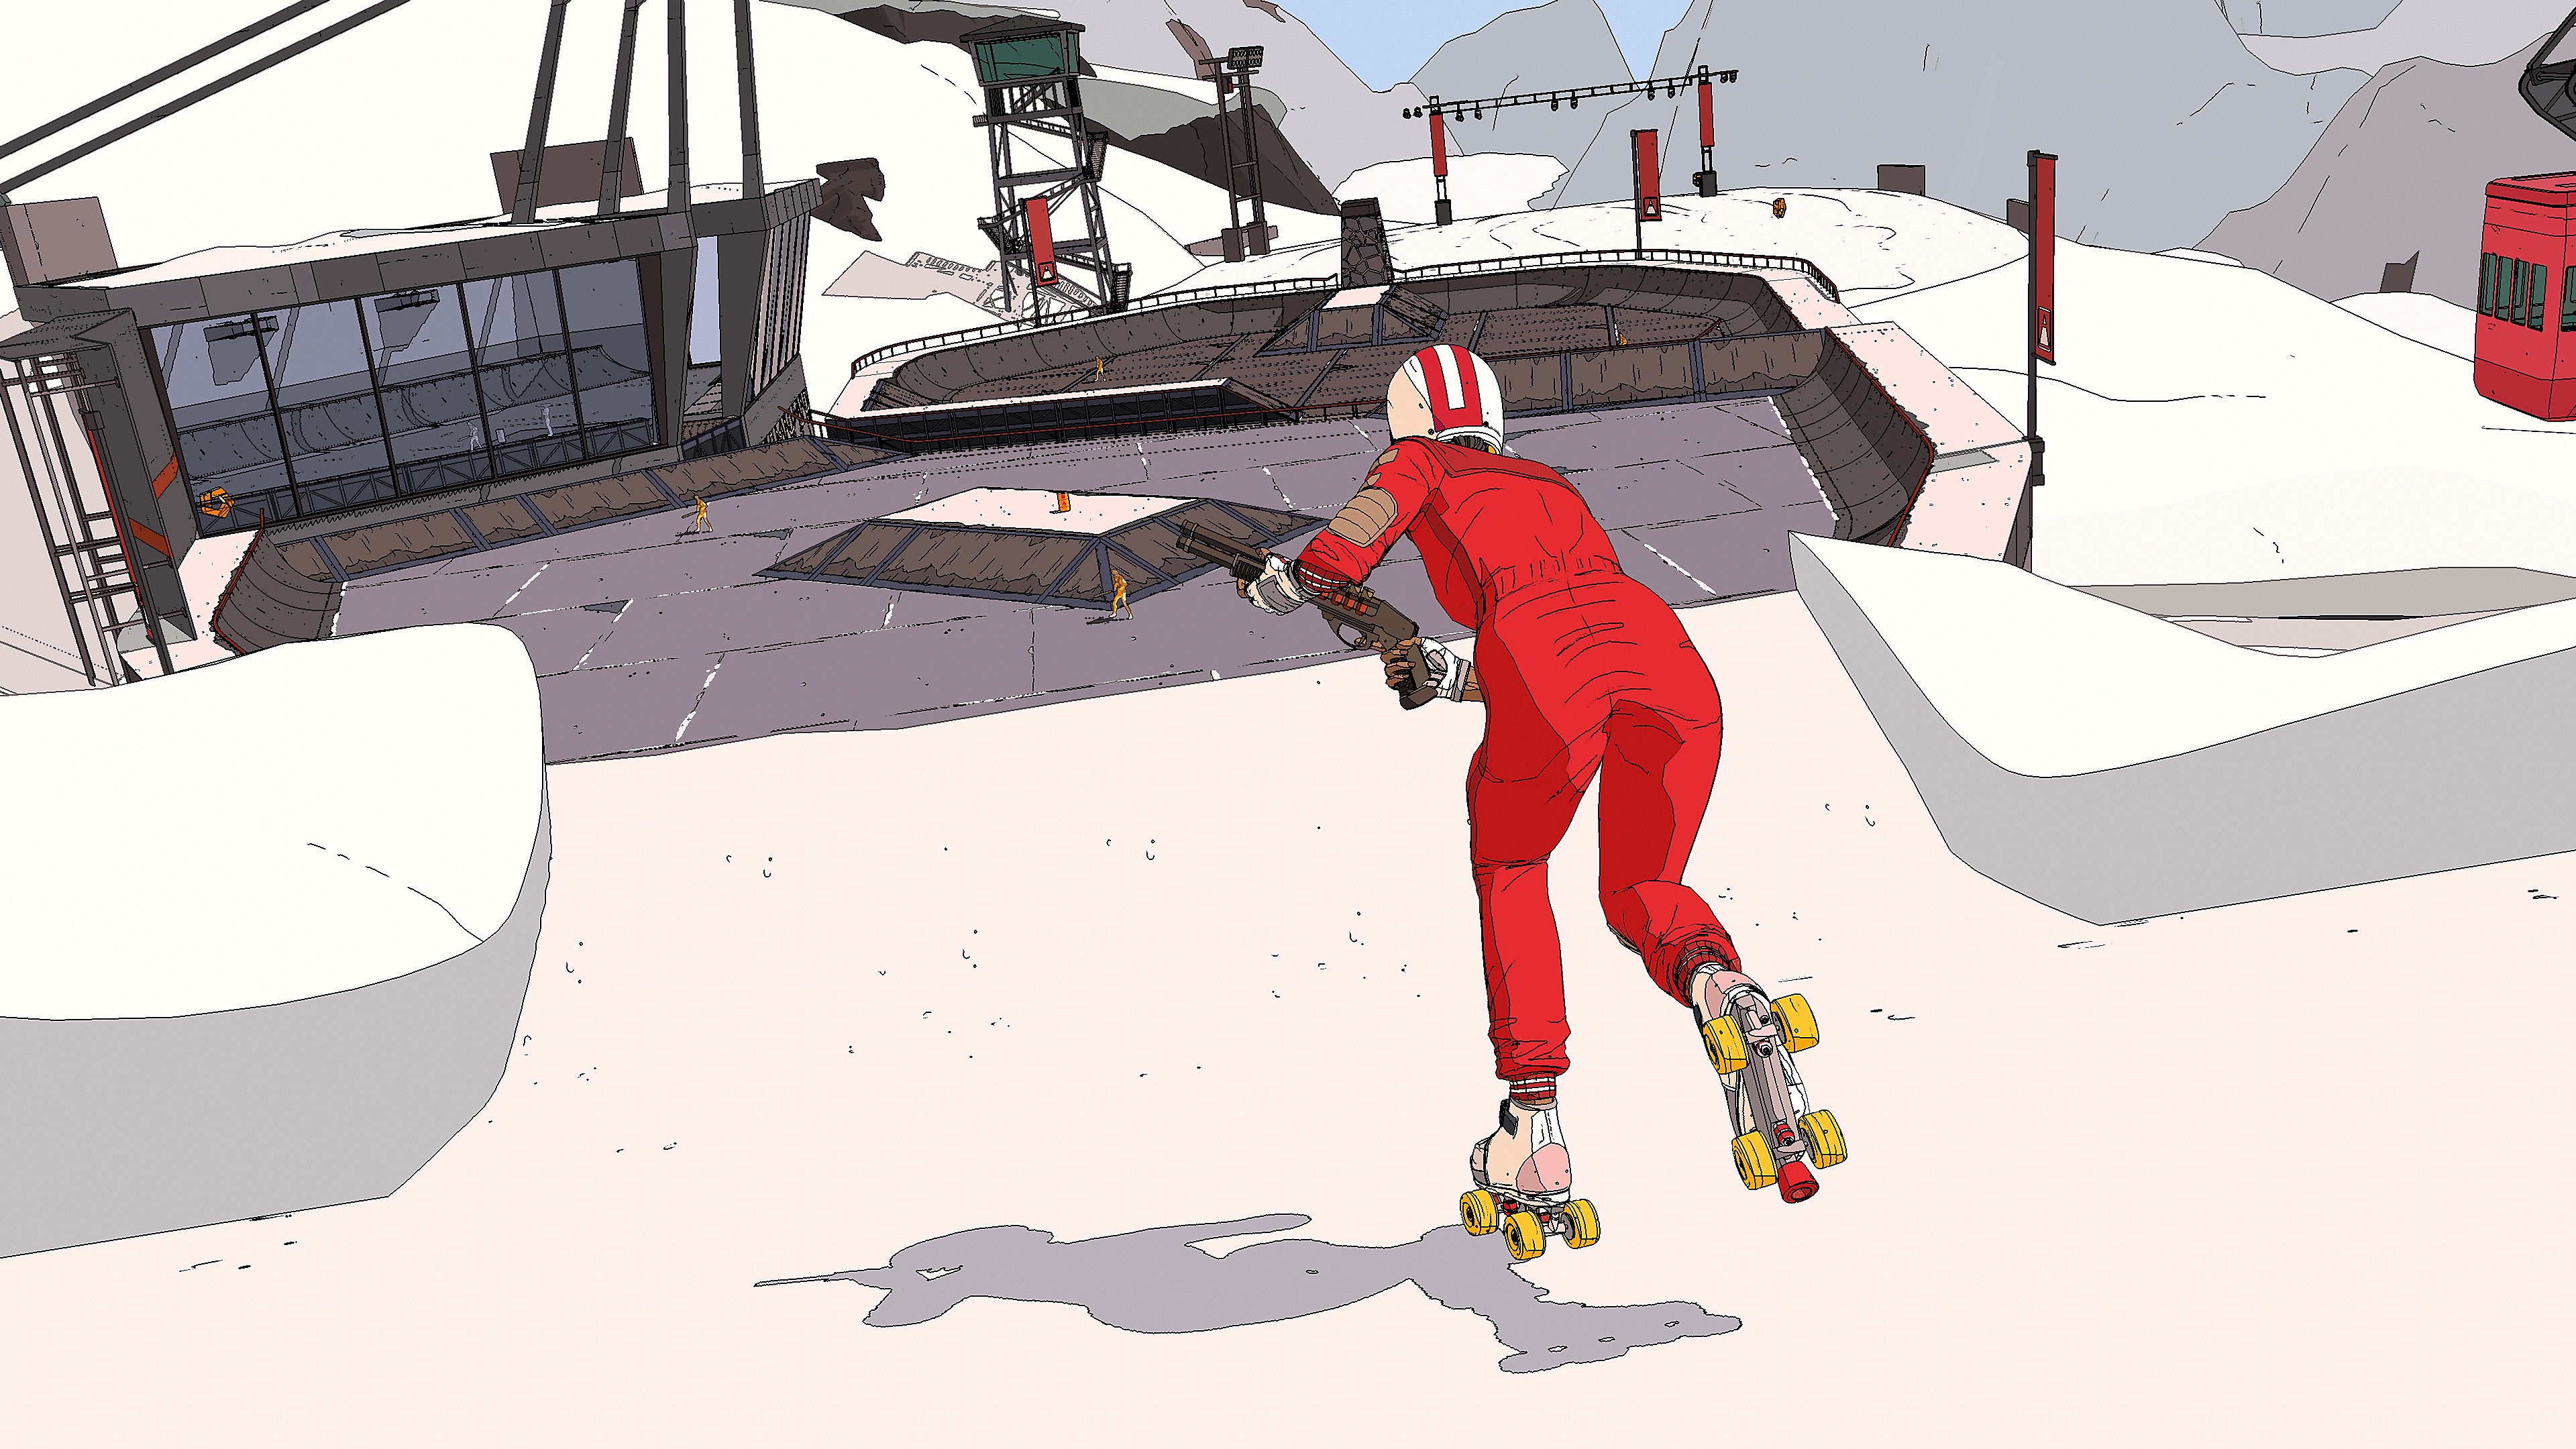 Captura de pantalla de Rollerdrome mostrando a un skater en un mono de trabajo con un casco mientras patina con una escopeta